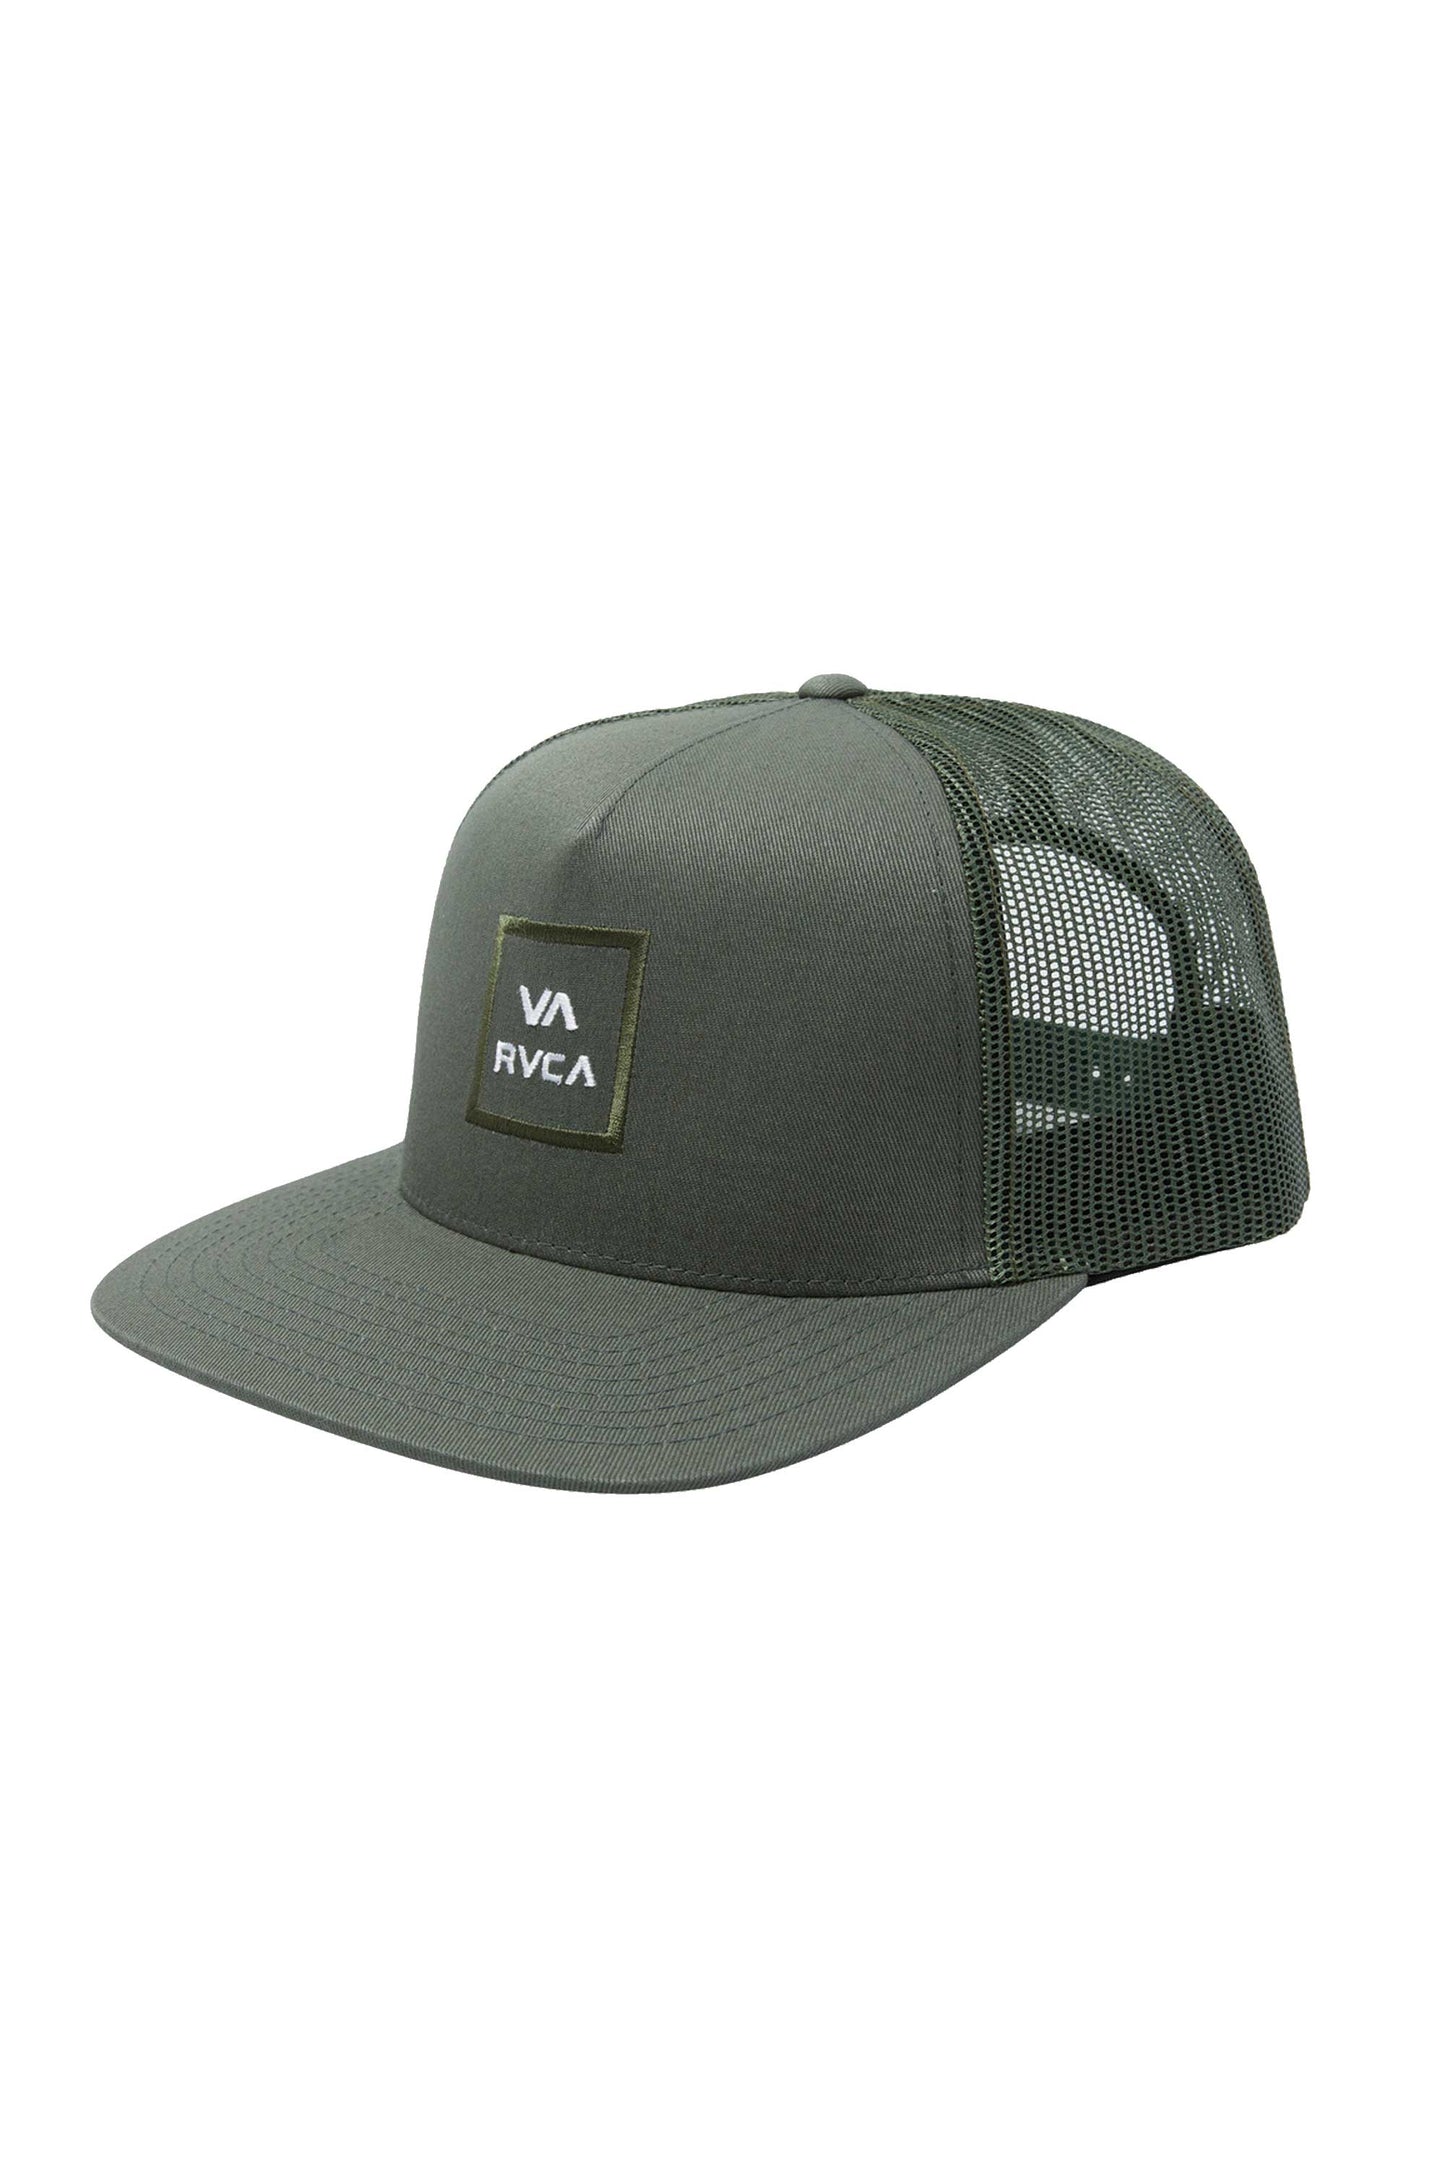 RVCA - Tees, Hoodies, Hats & More